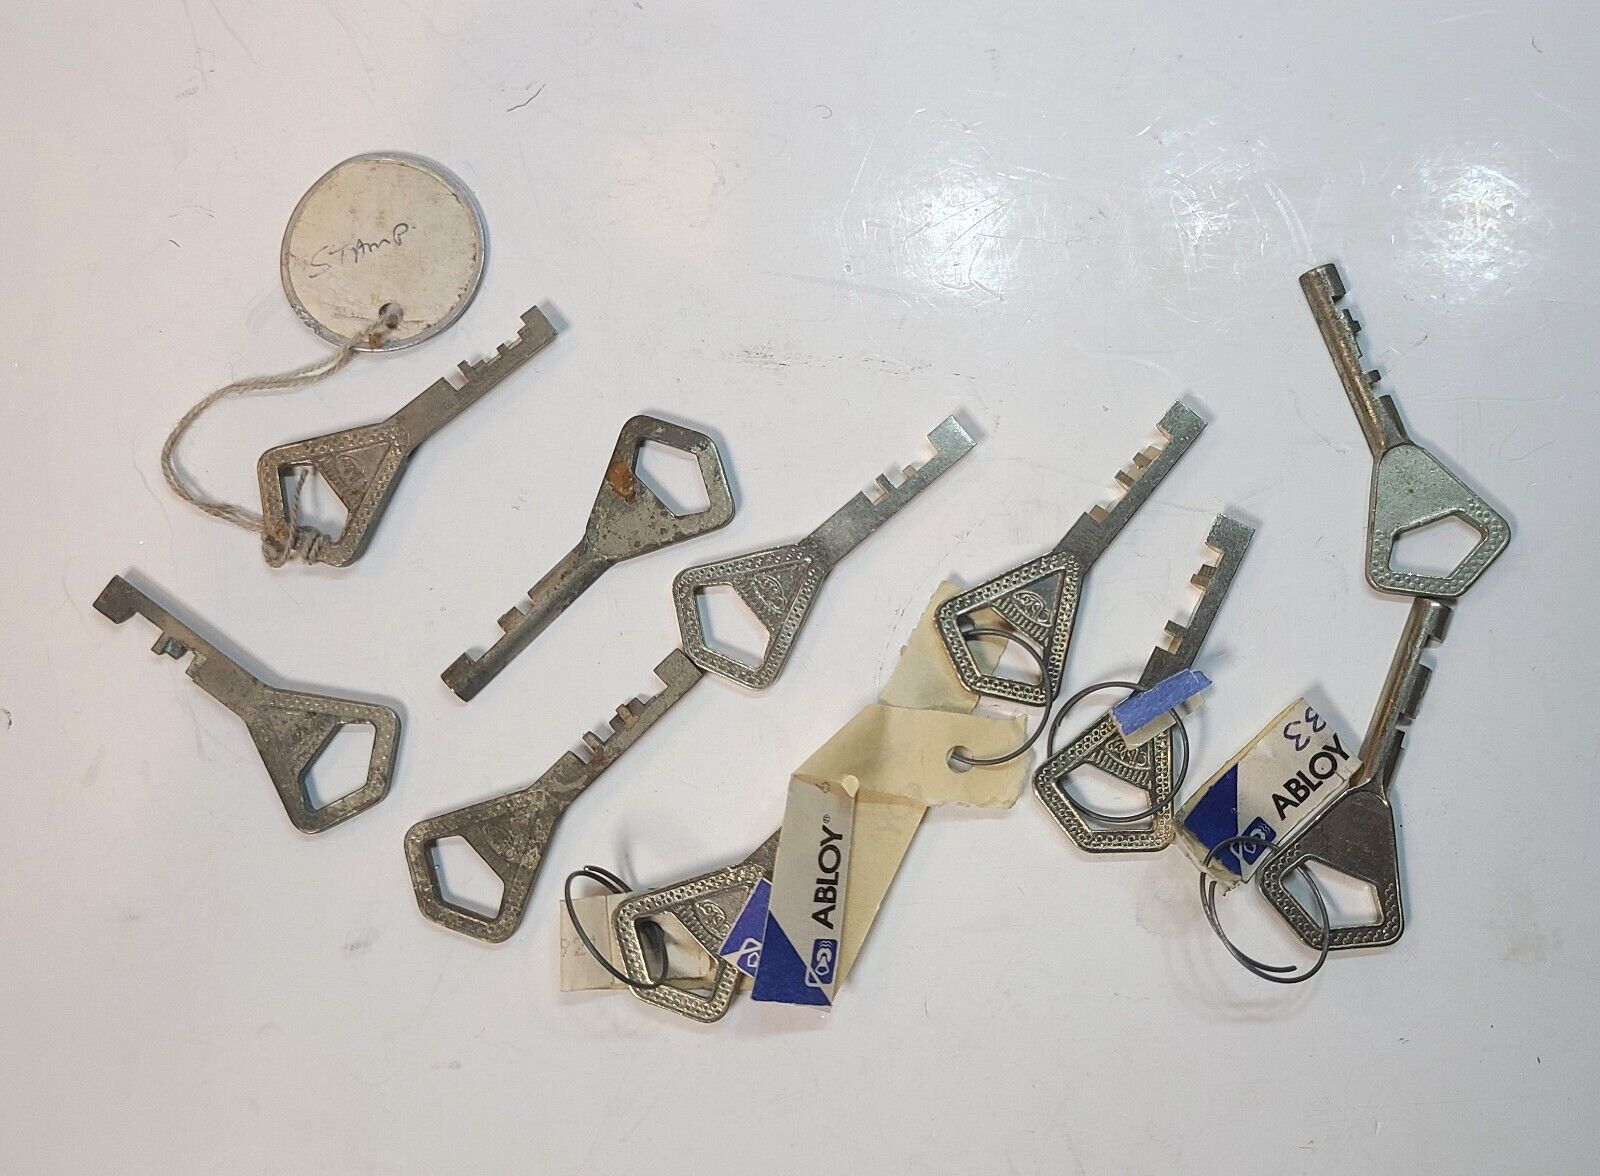 Lot of 10 - Abloy Classic Keys - Each key is different - Locksport